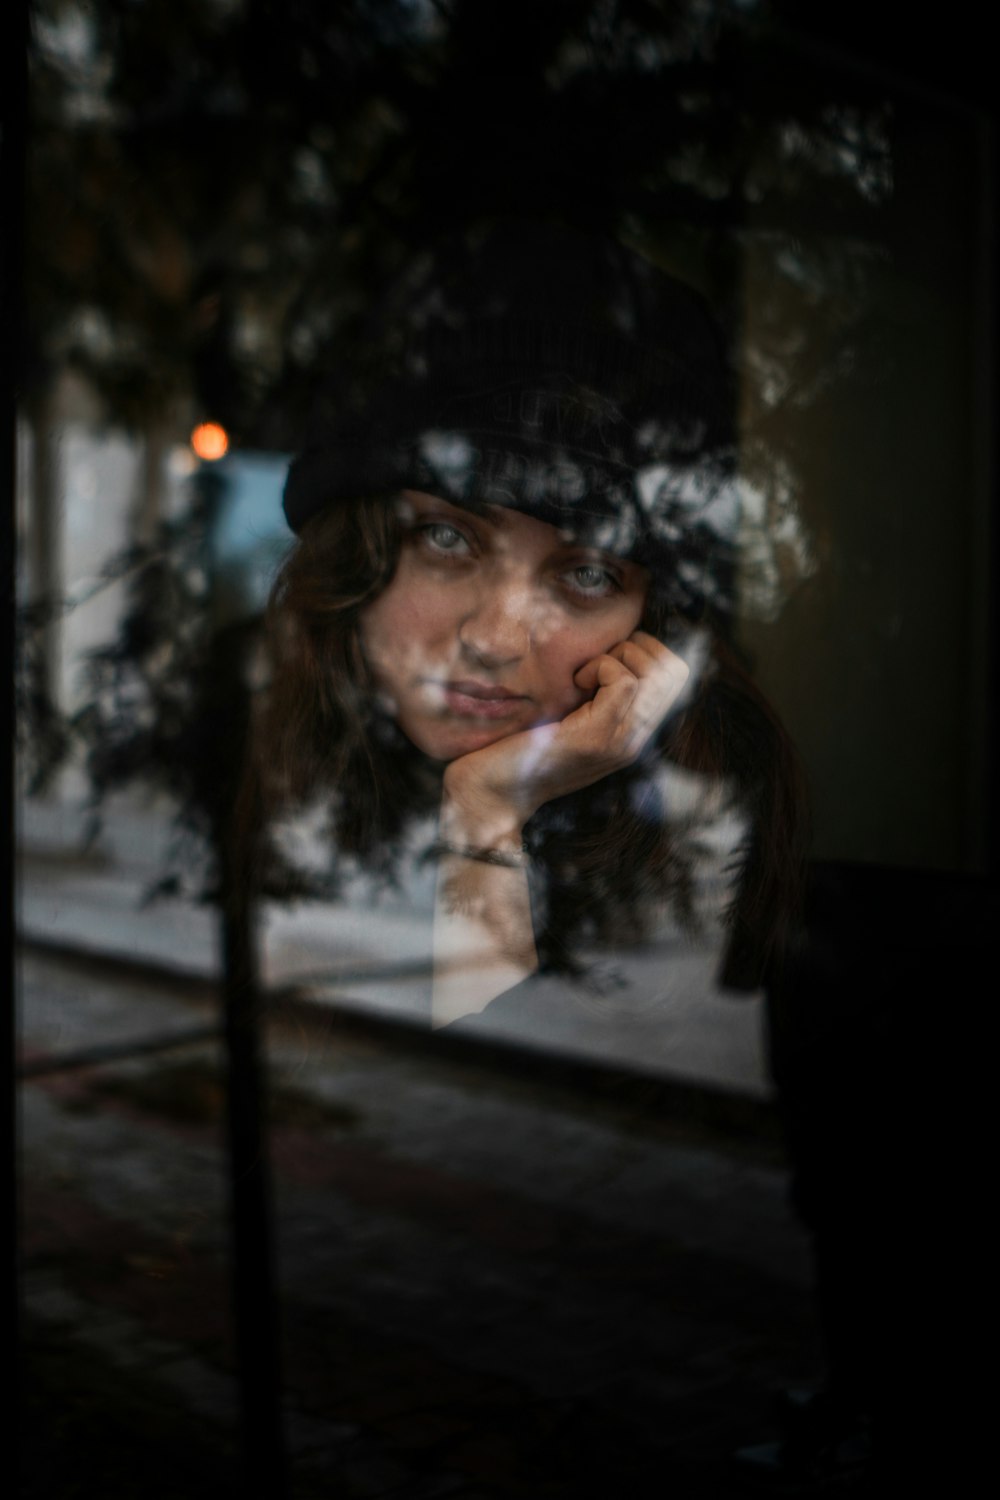 Un riflesso di una donna in una finestra